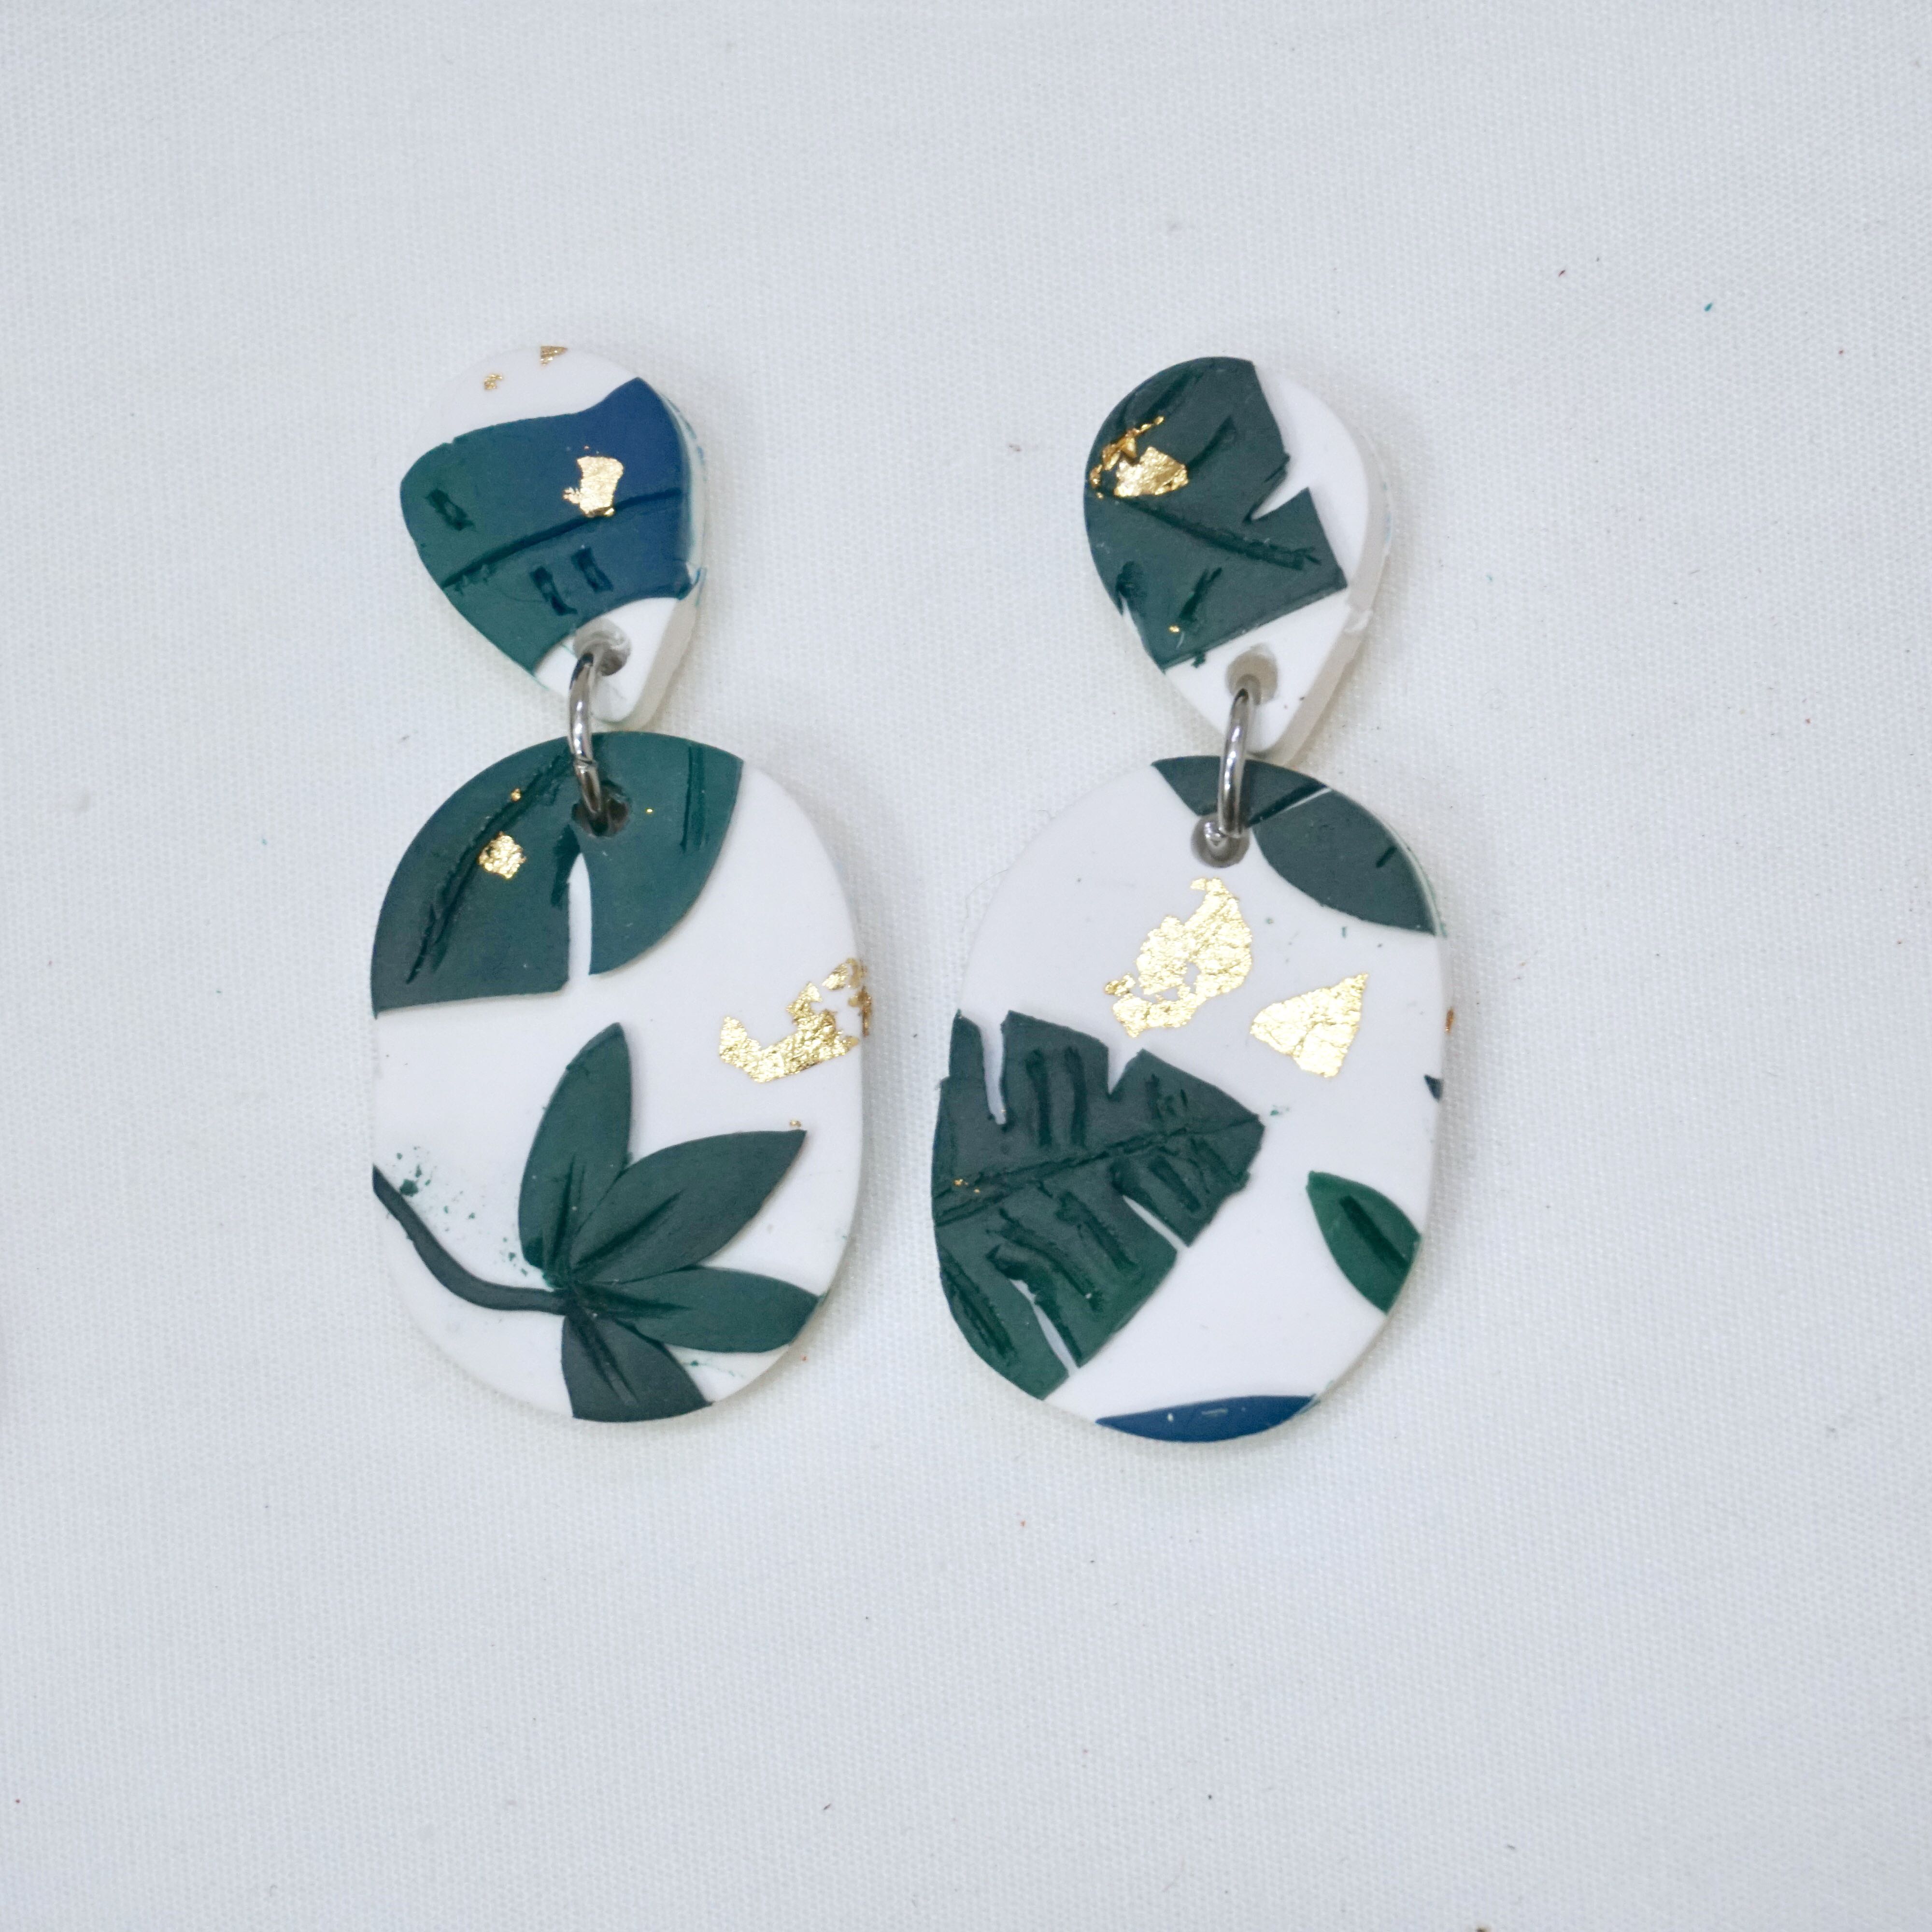 Statement Earrings Clay Earrings Boho Earrings Unique Earrings Handmade Polymer Clay Earrings Gifts for Her Palm Leaf Studs